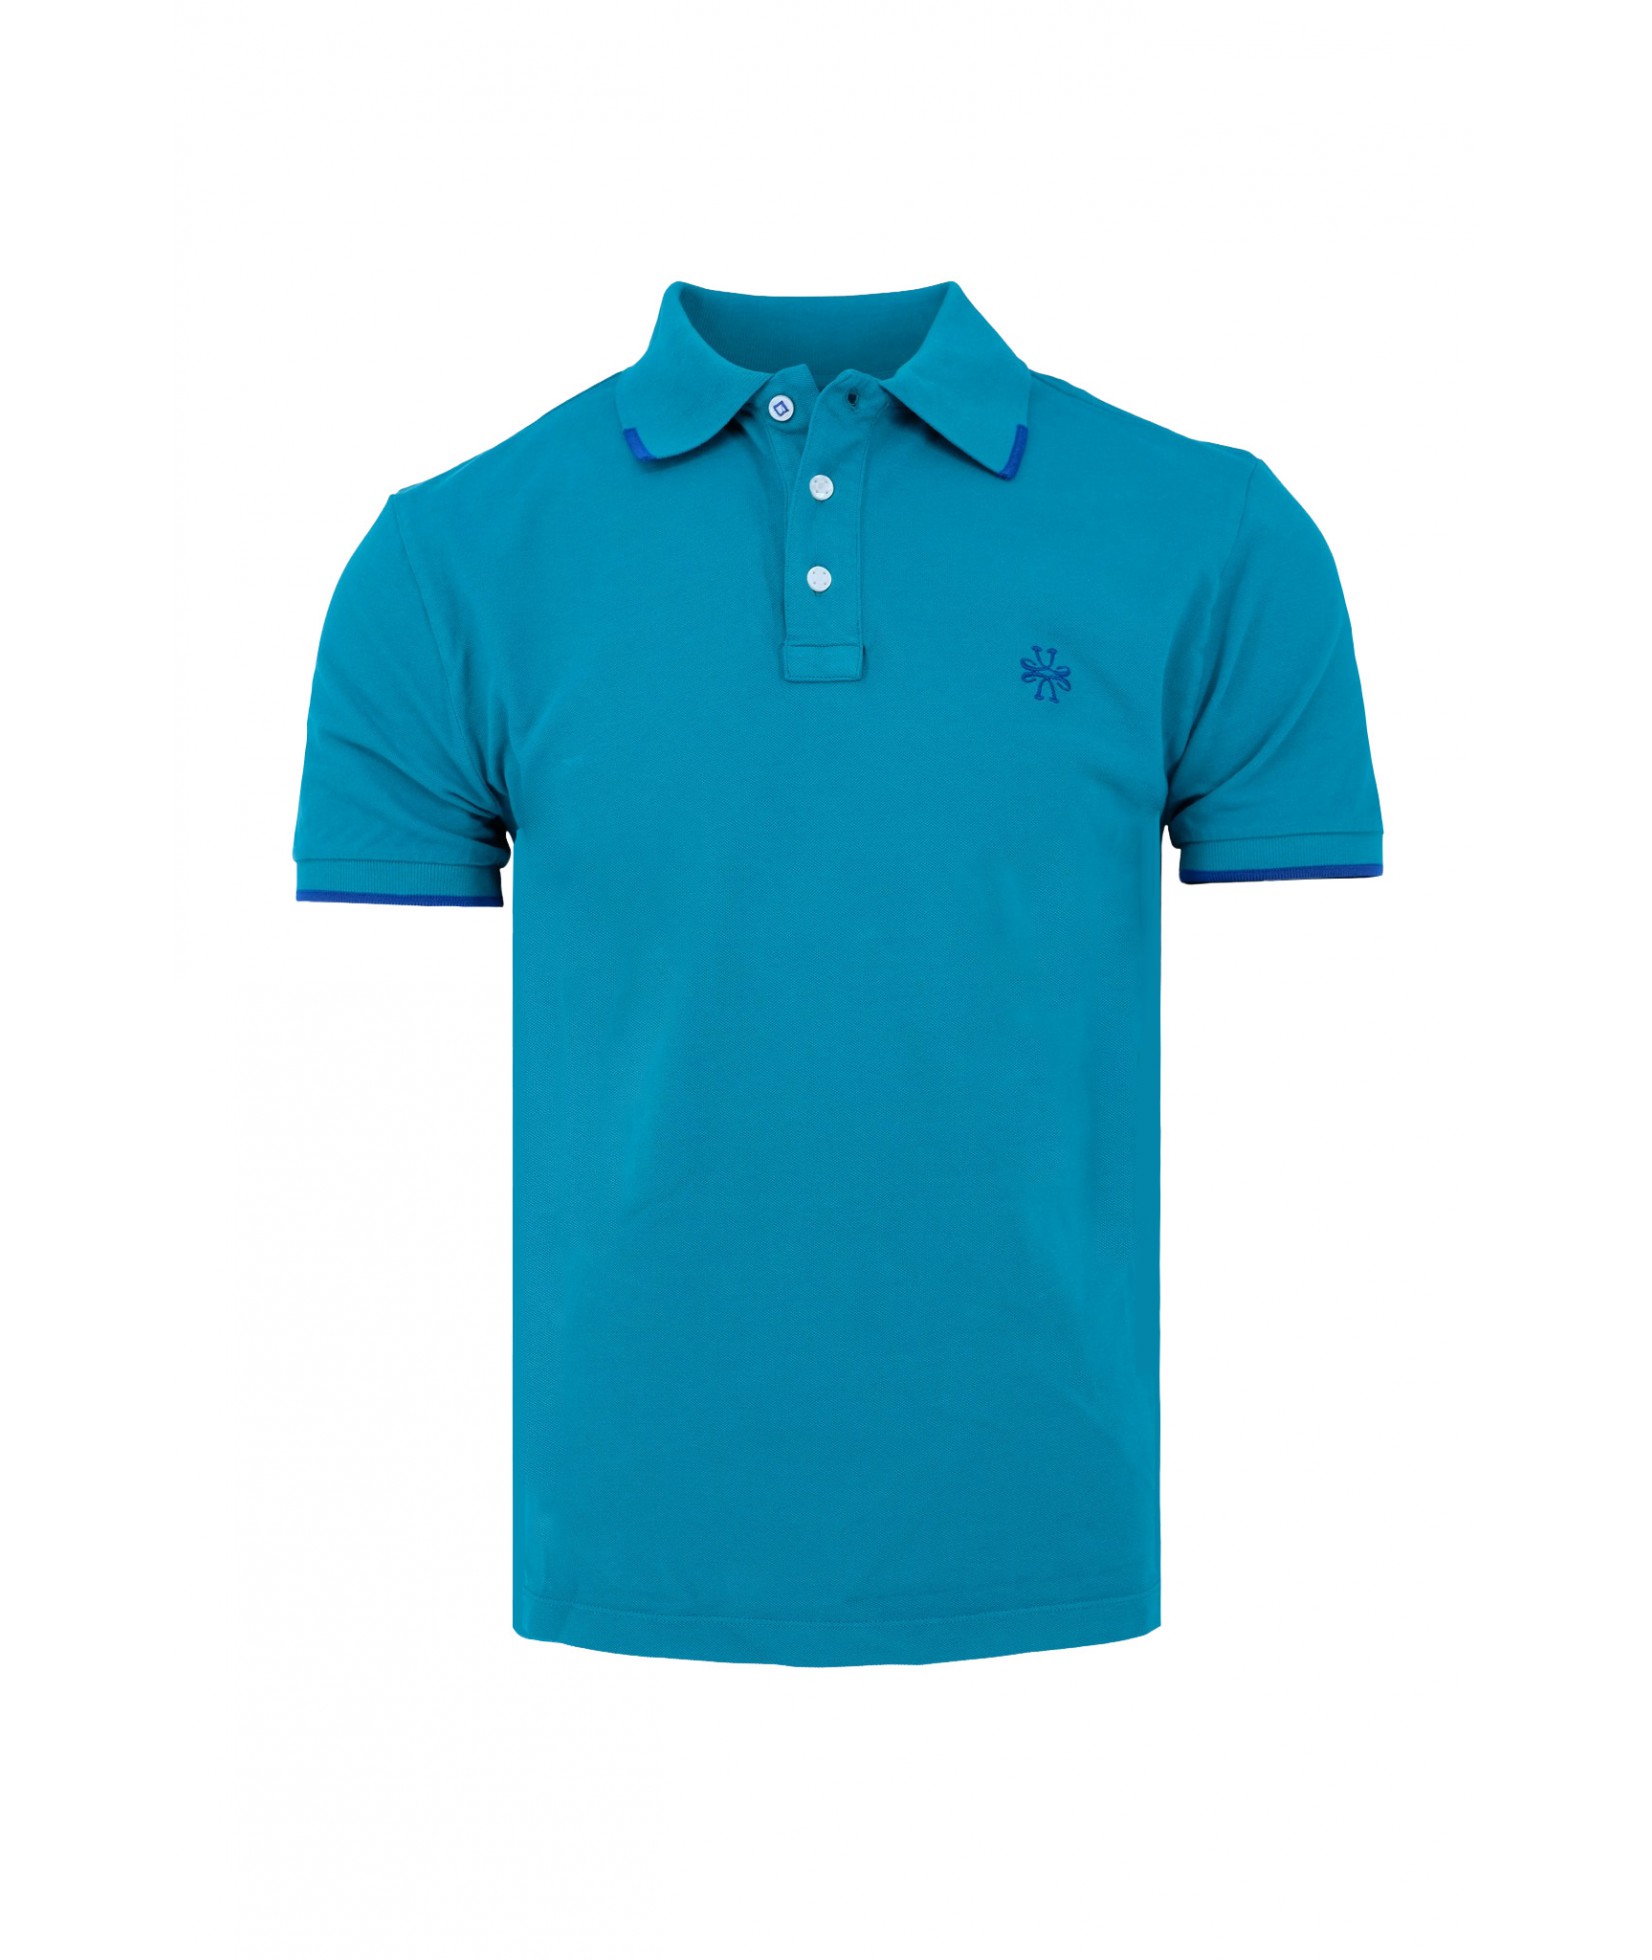 Jacob Cohen Polo shirt turquoise 2464 T74 (38891)